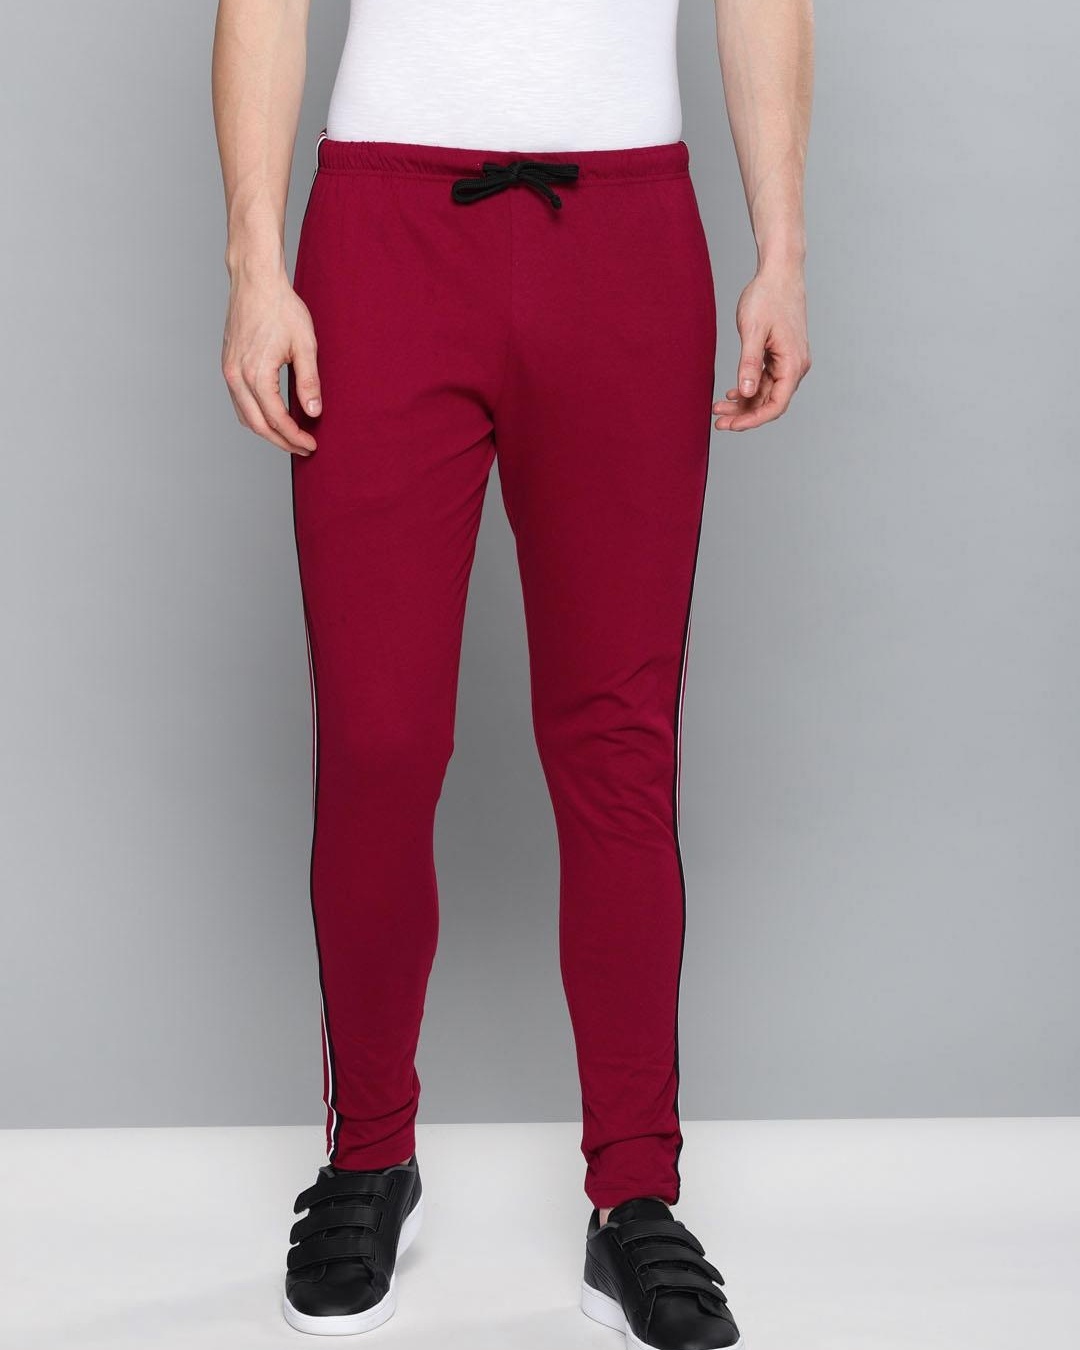 Buy Men's Red Striped Track Pants for Men Red Online at Bewakoof